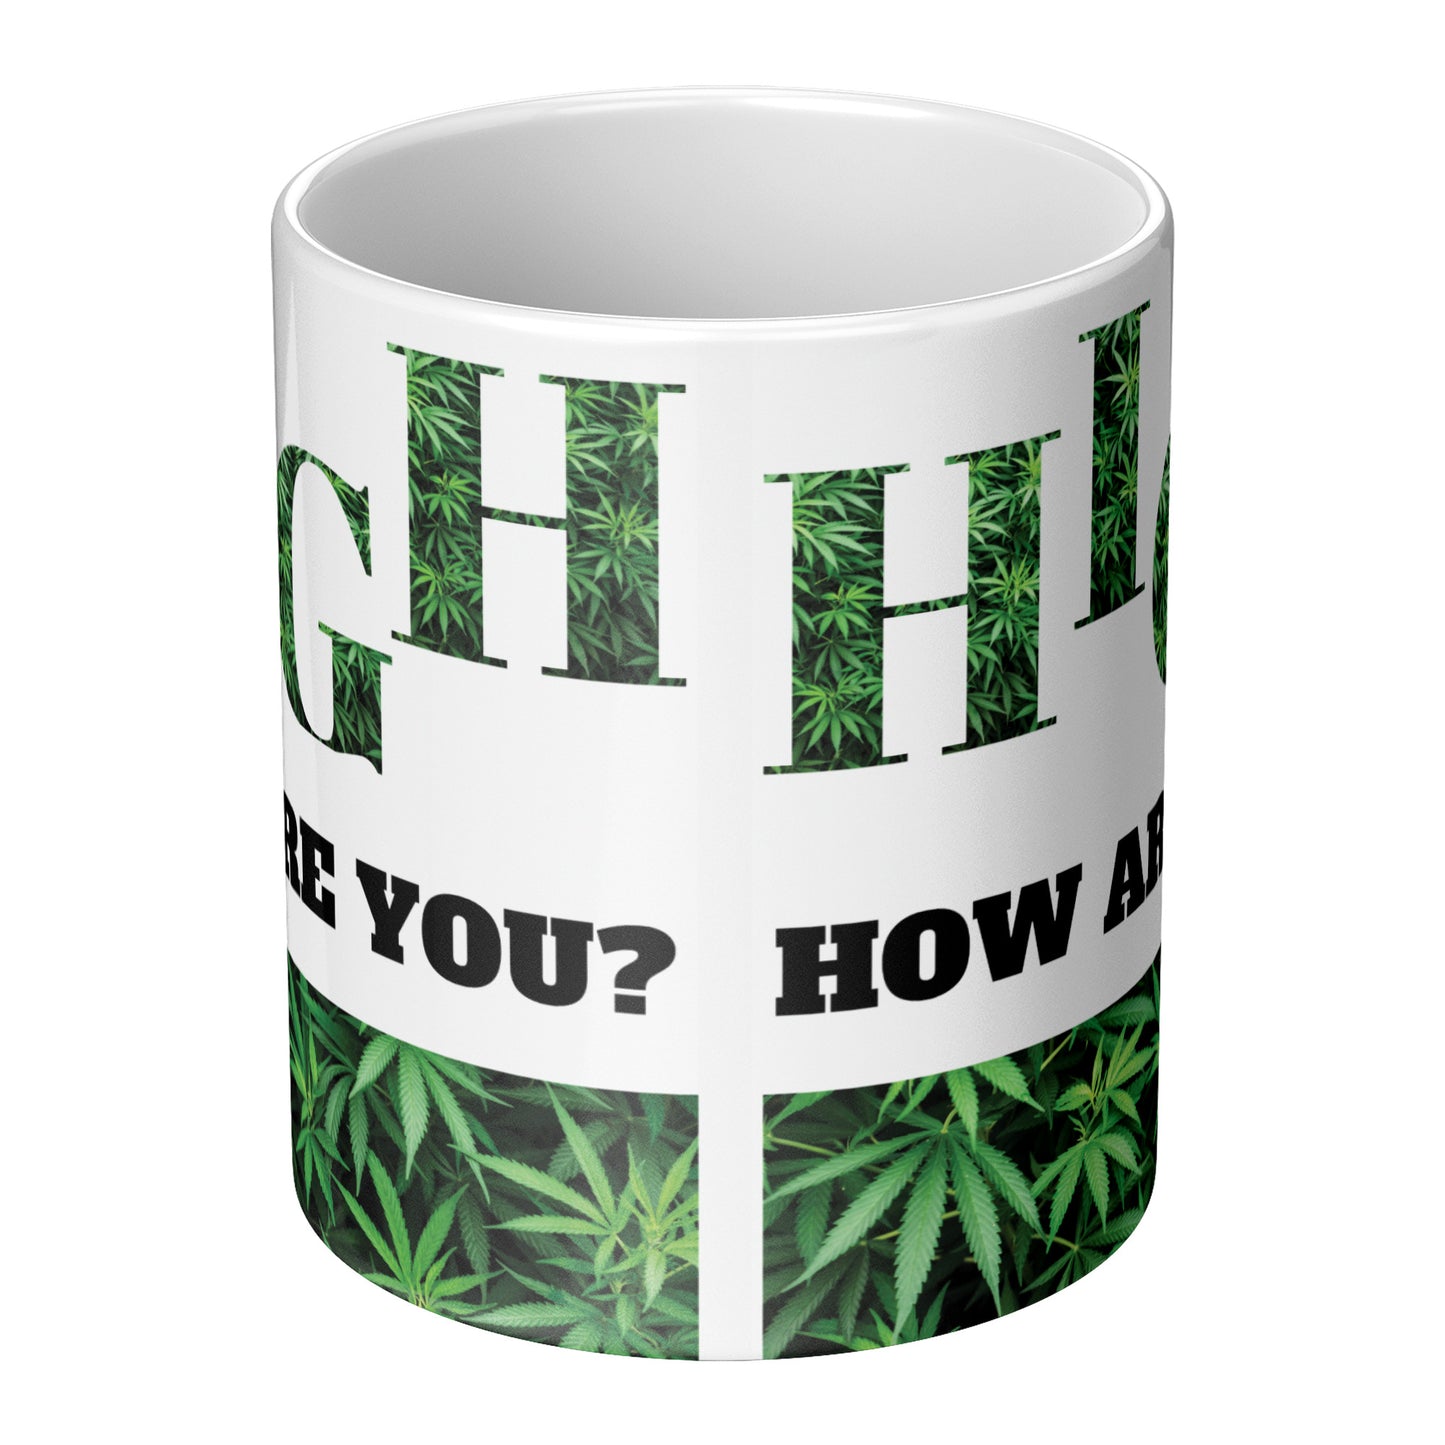 High How Are You Cannabis Inspired Mug